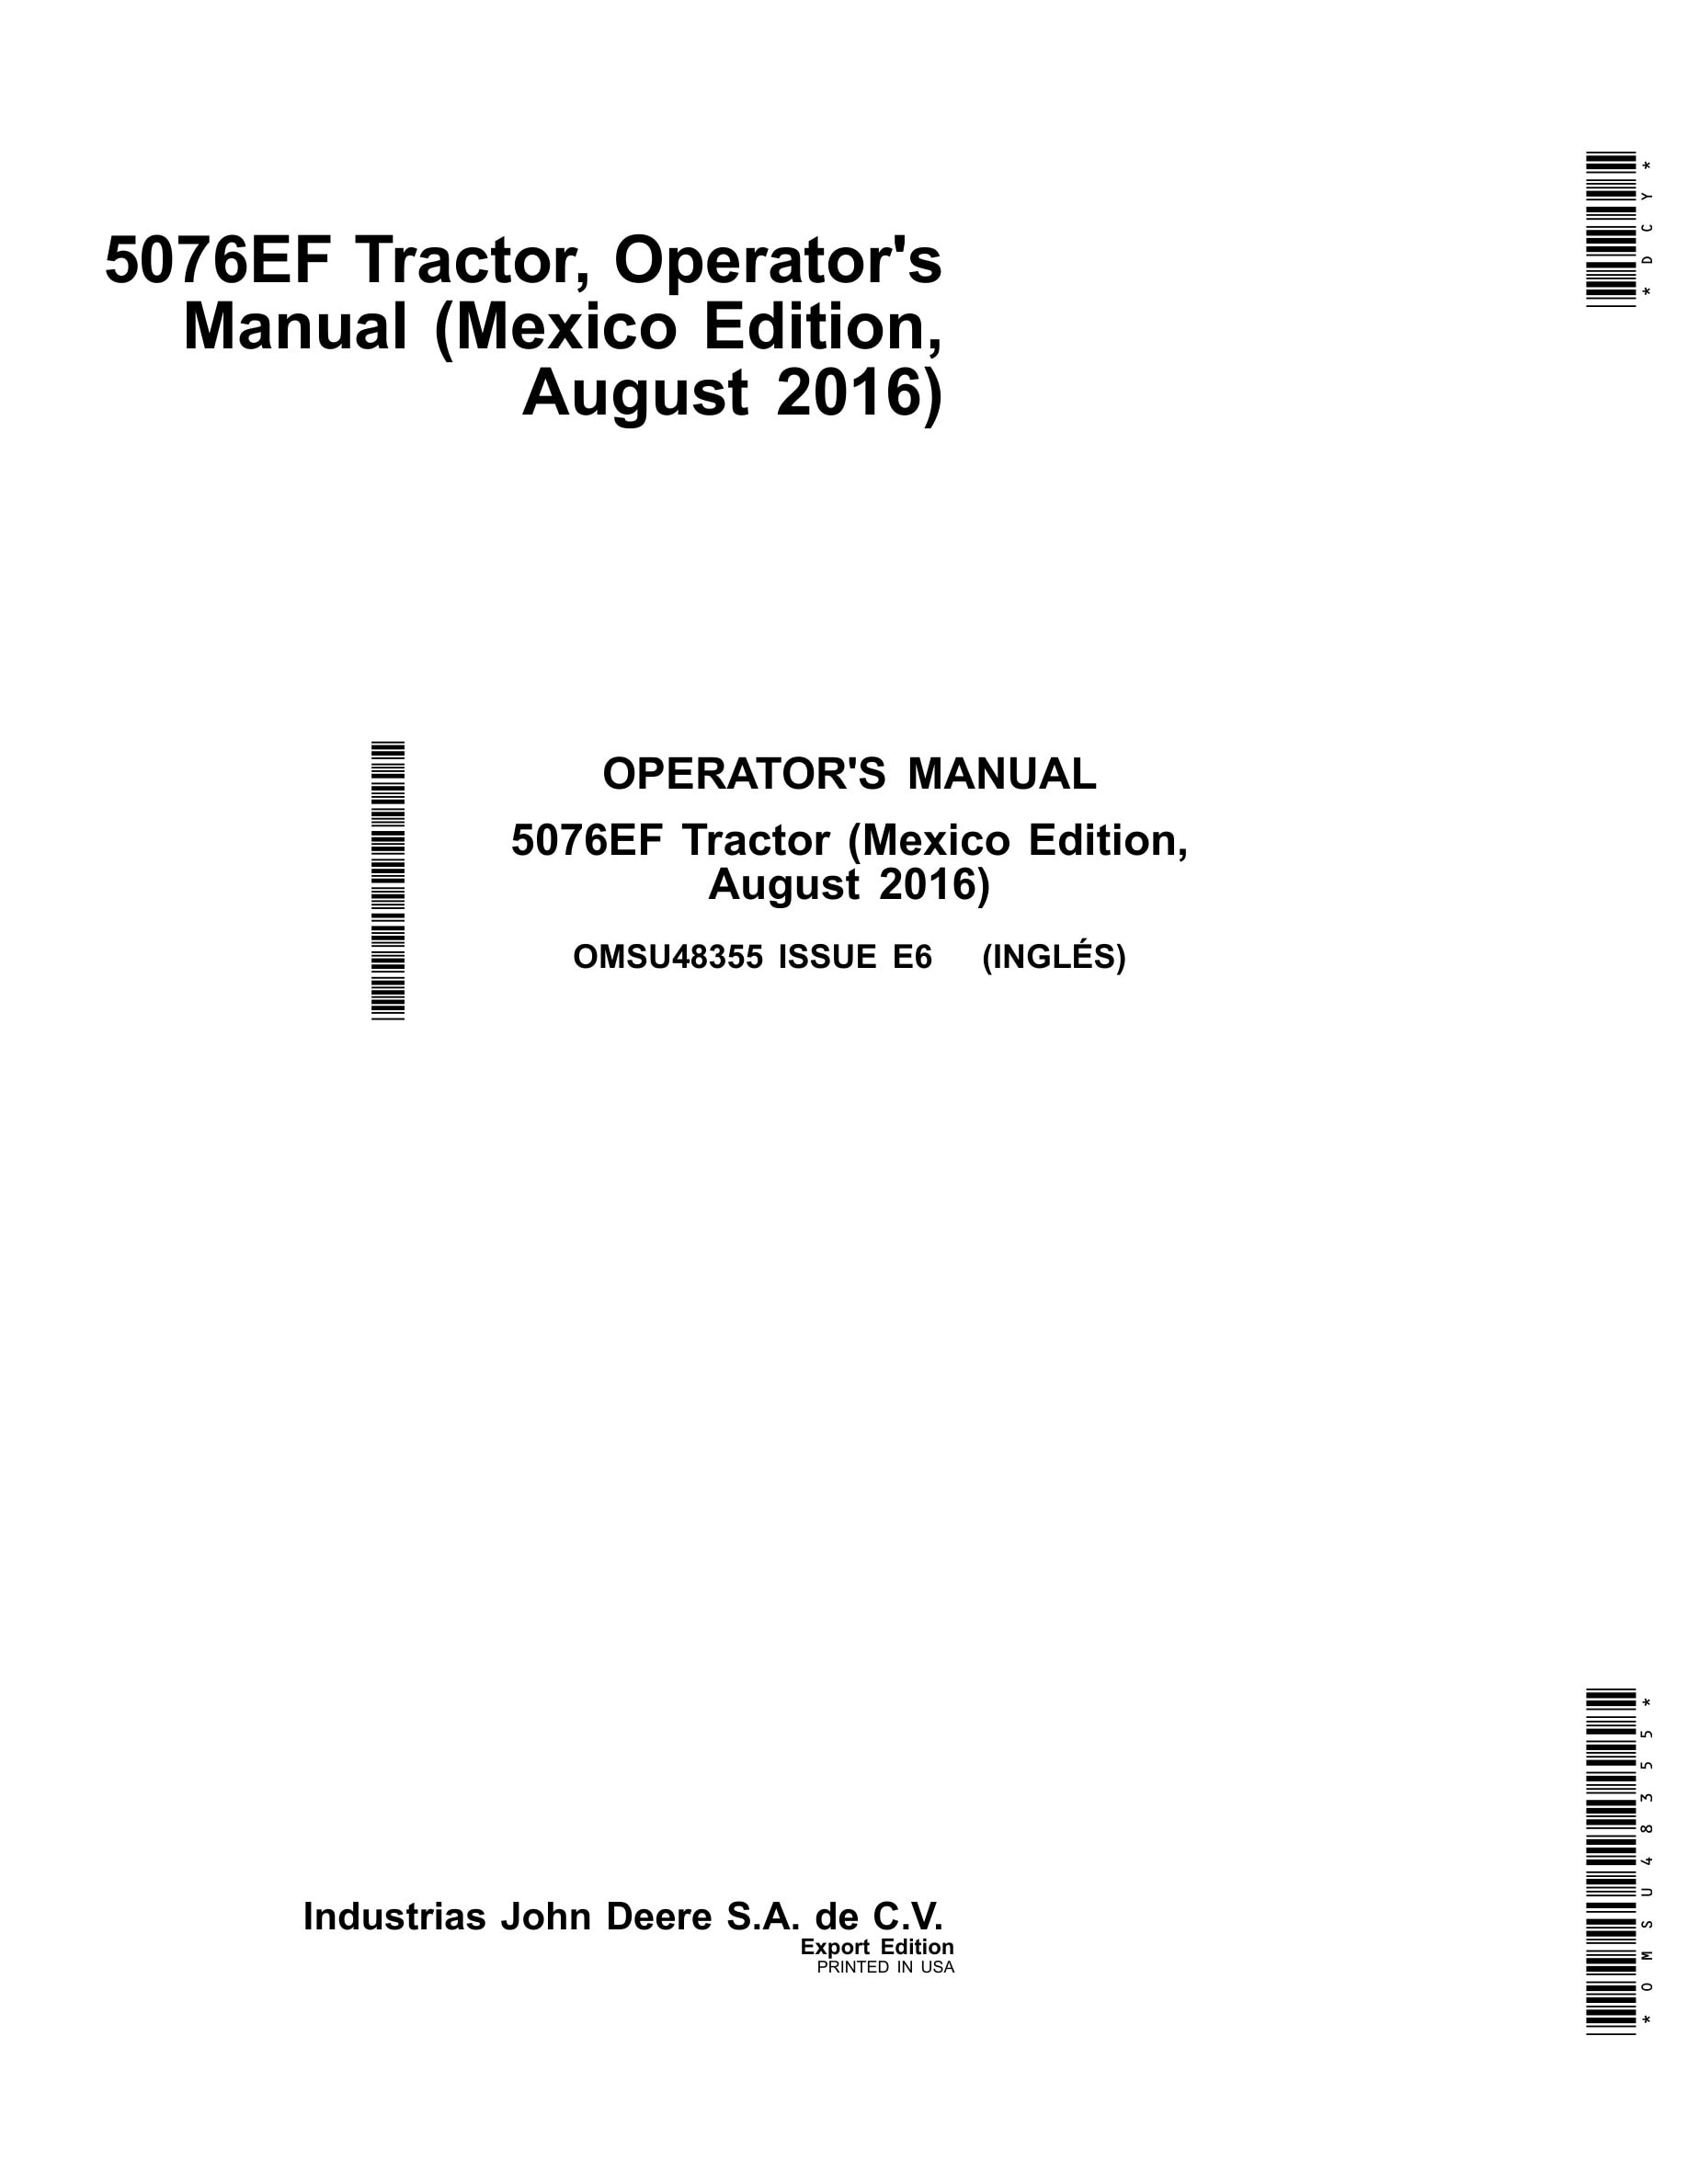 John Deere 5076ef Tractors Operator Manual OMSU48355-1